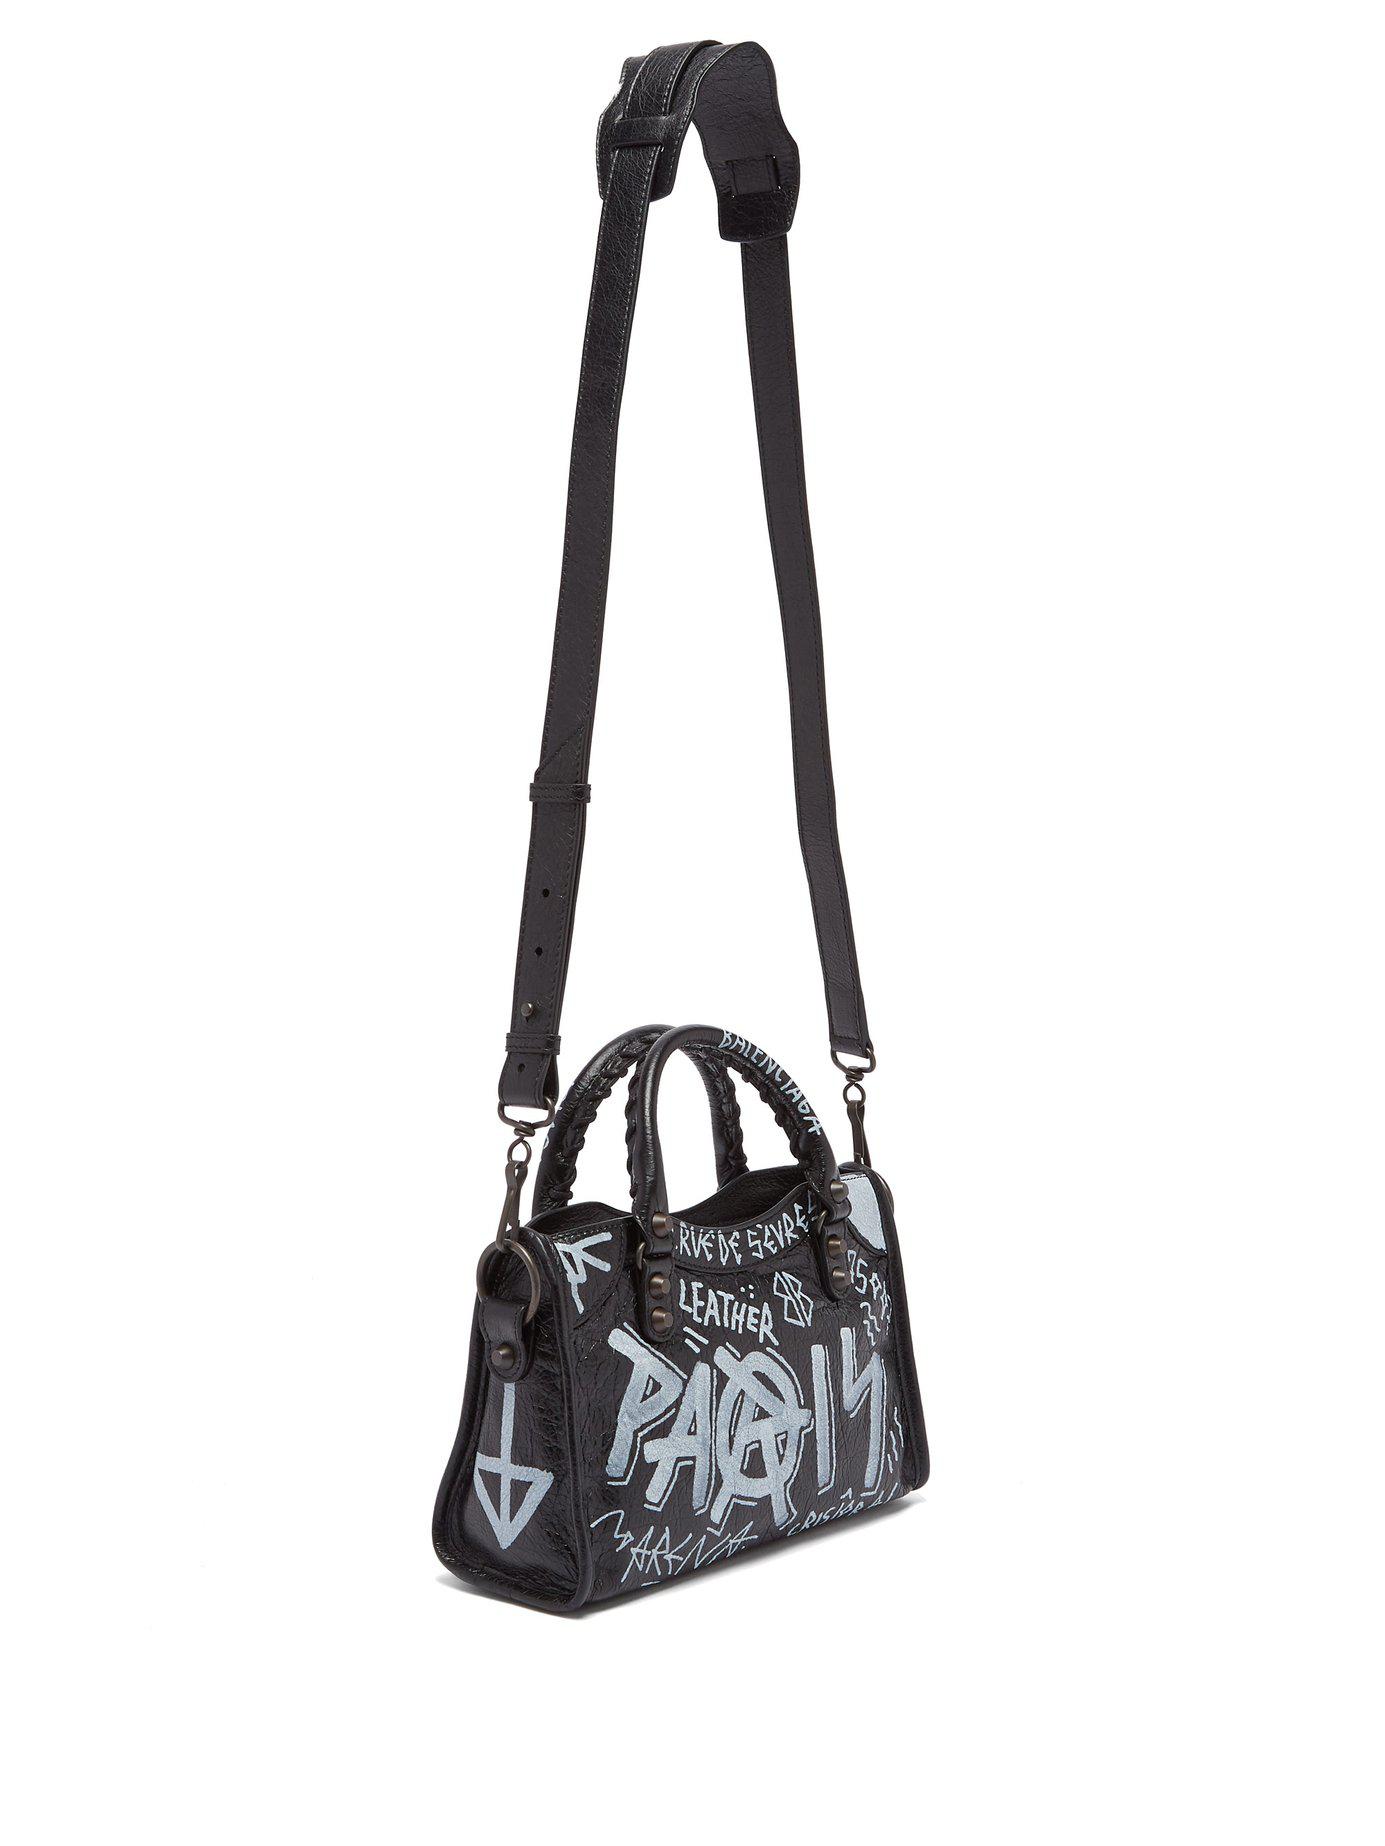 Balenciaga Classic City Mini Graffiti Bag in Black | Lyst